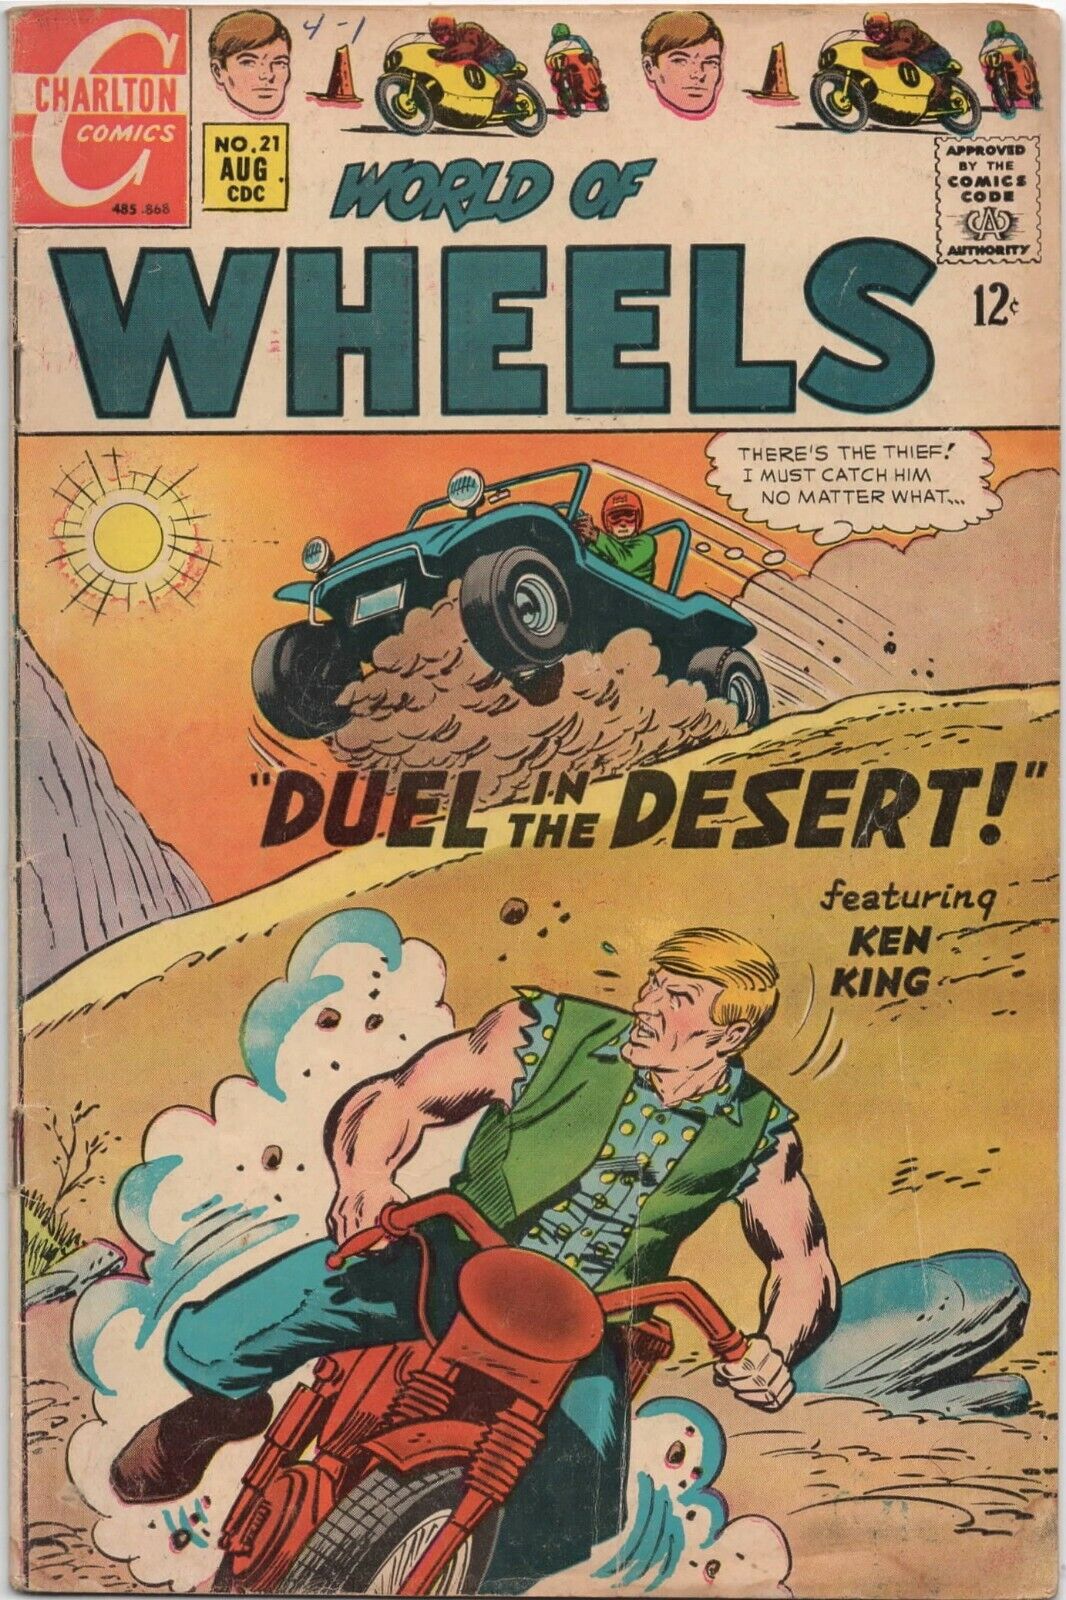 World of Wheels Vol 1 No. 21 Aug 1968 Motorcycle Comics Charlton Race Comic Book